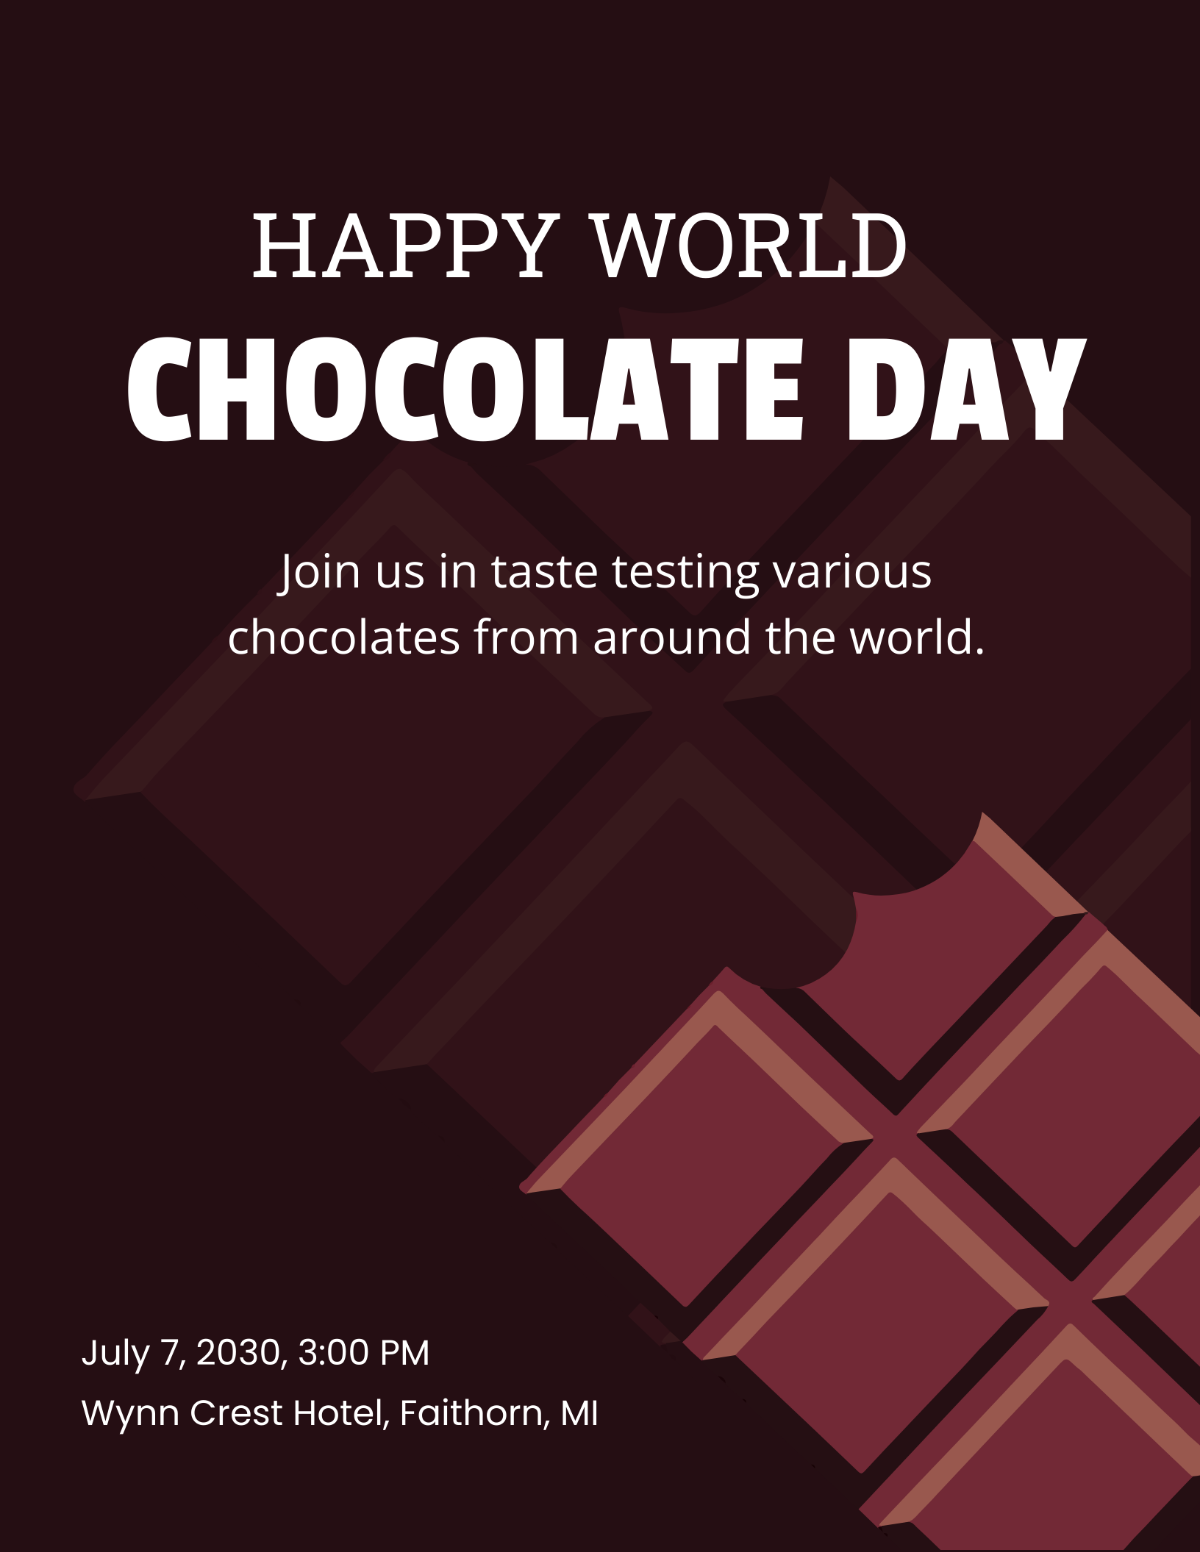 World Chocolate Day Pinterest Pin Template